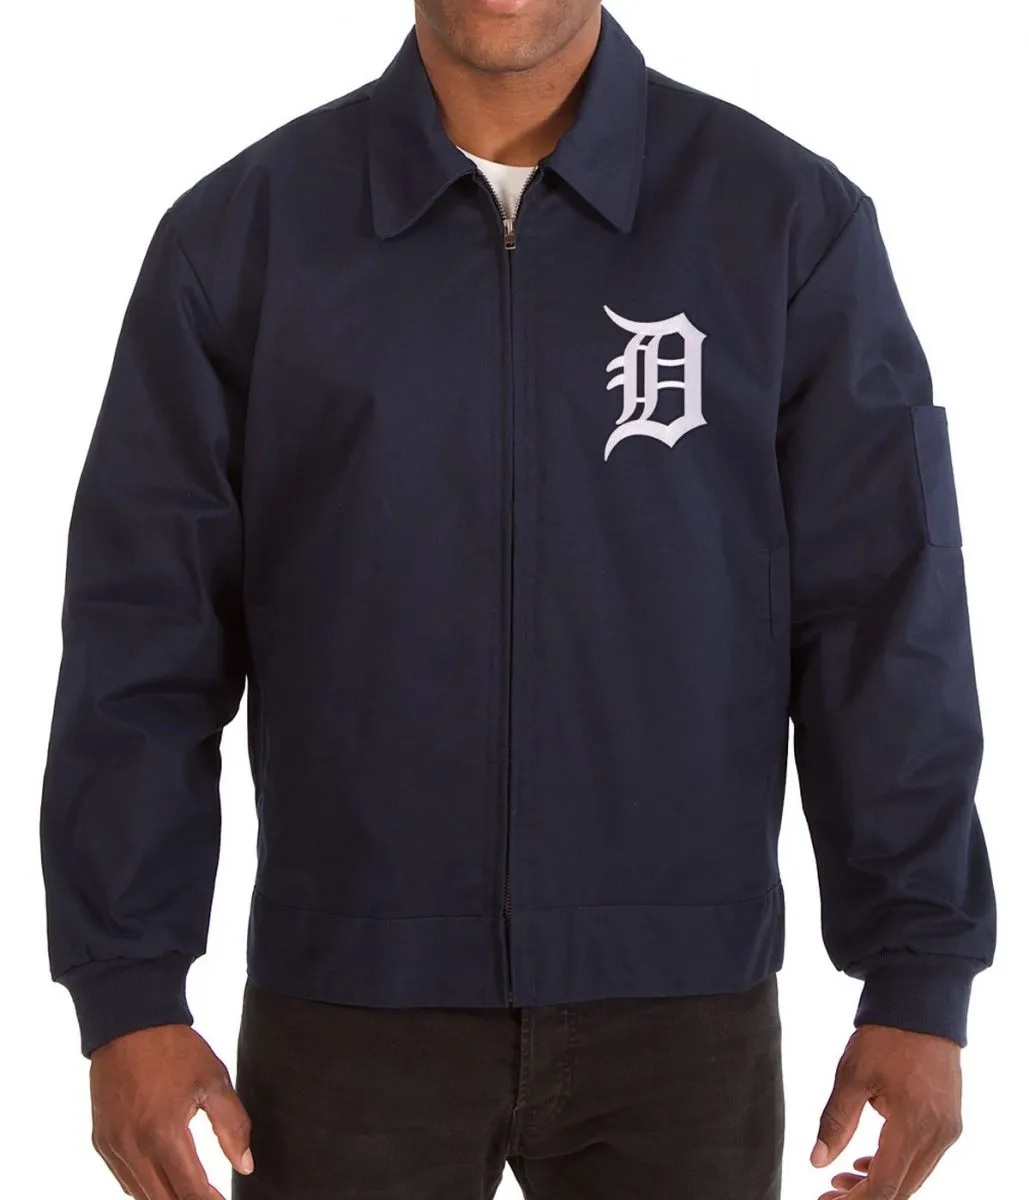 Detroit Tigers Workwear Jacket